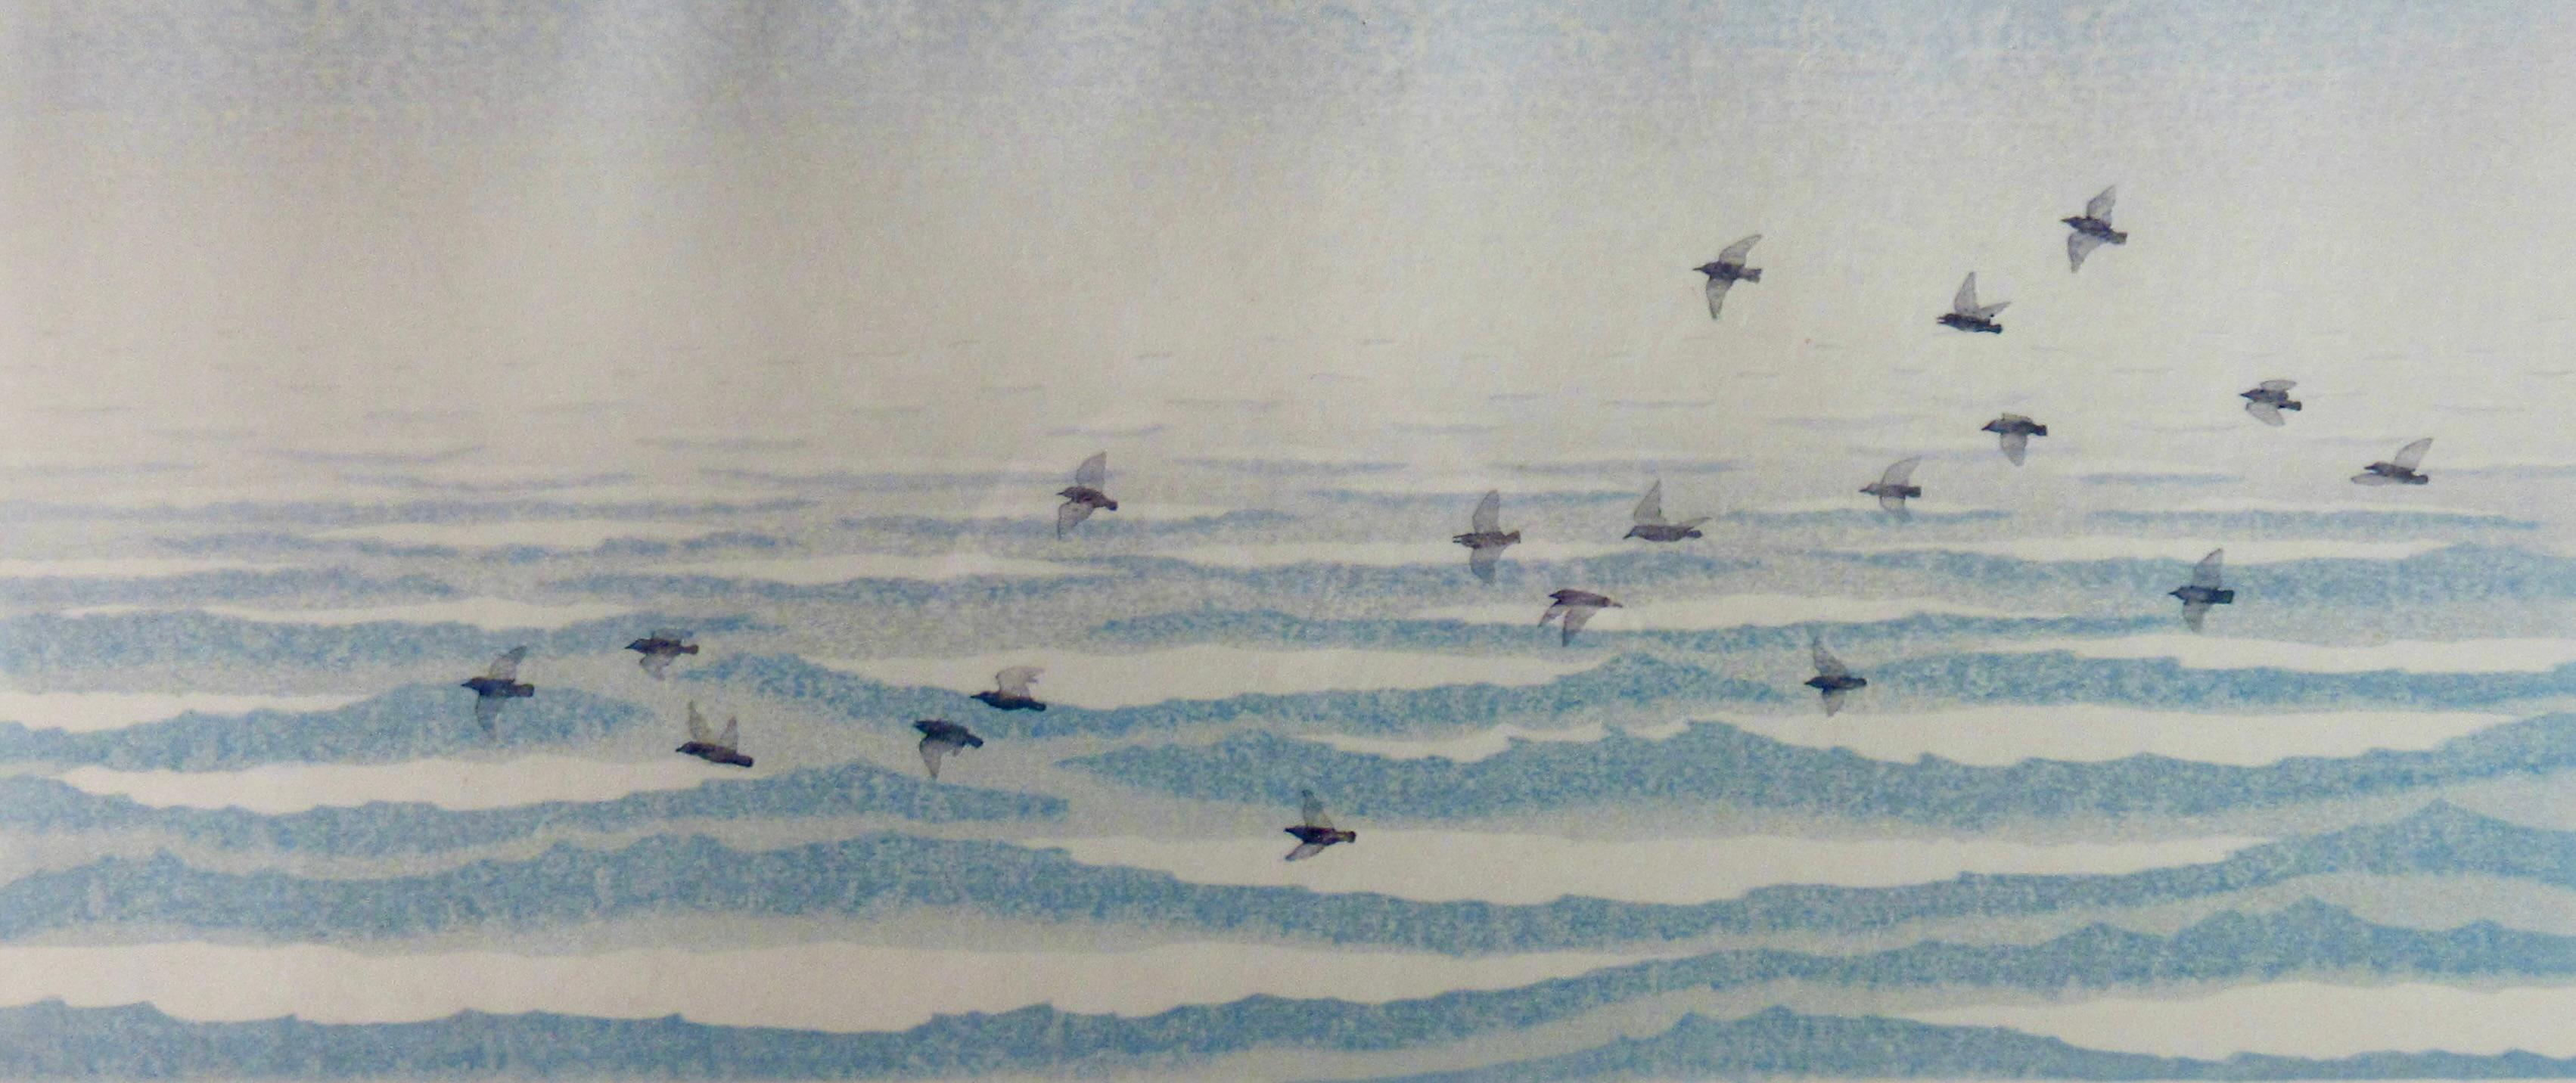 Starling - Realist Print by Suezan Aikins